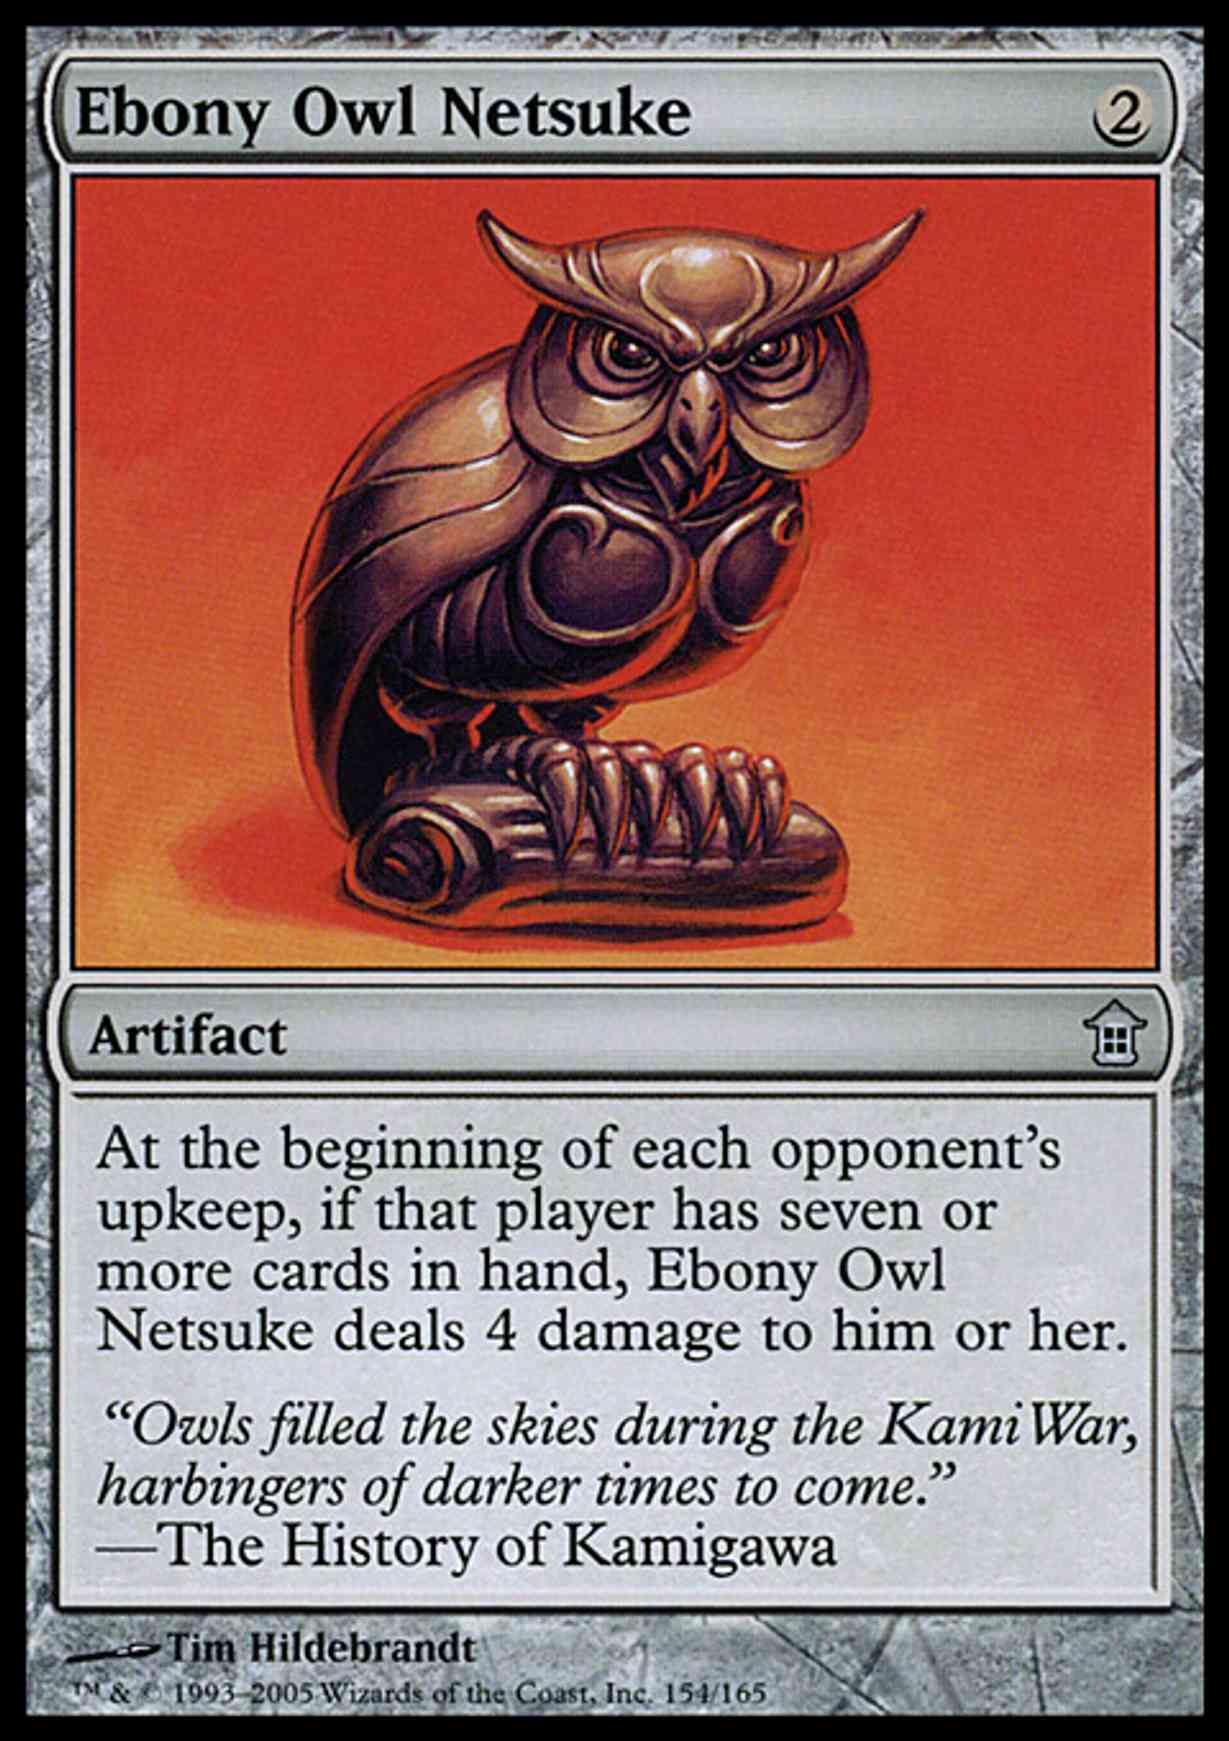 Ebony Owl Netsuke magic card front